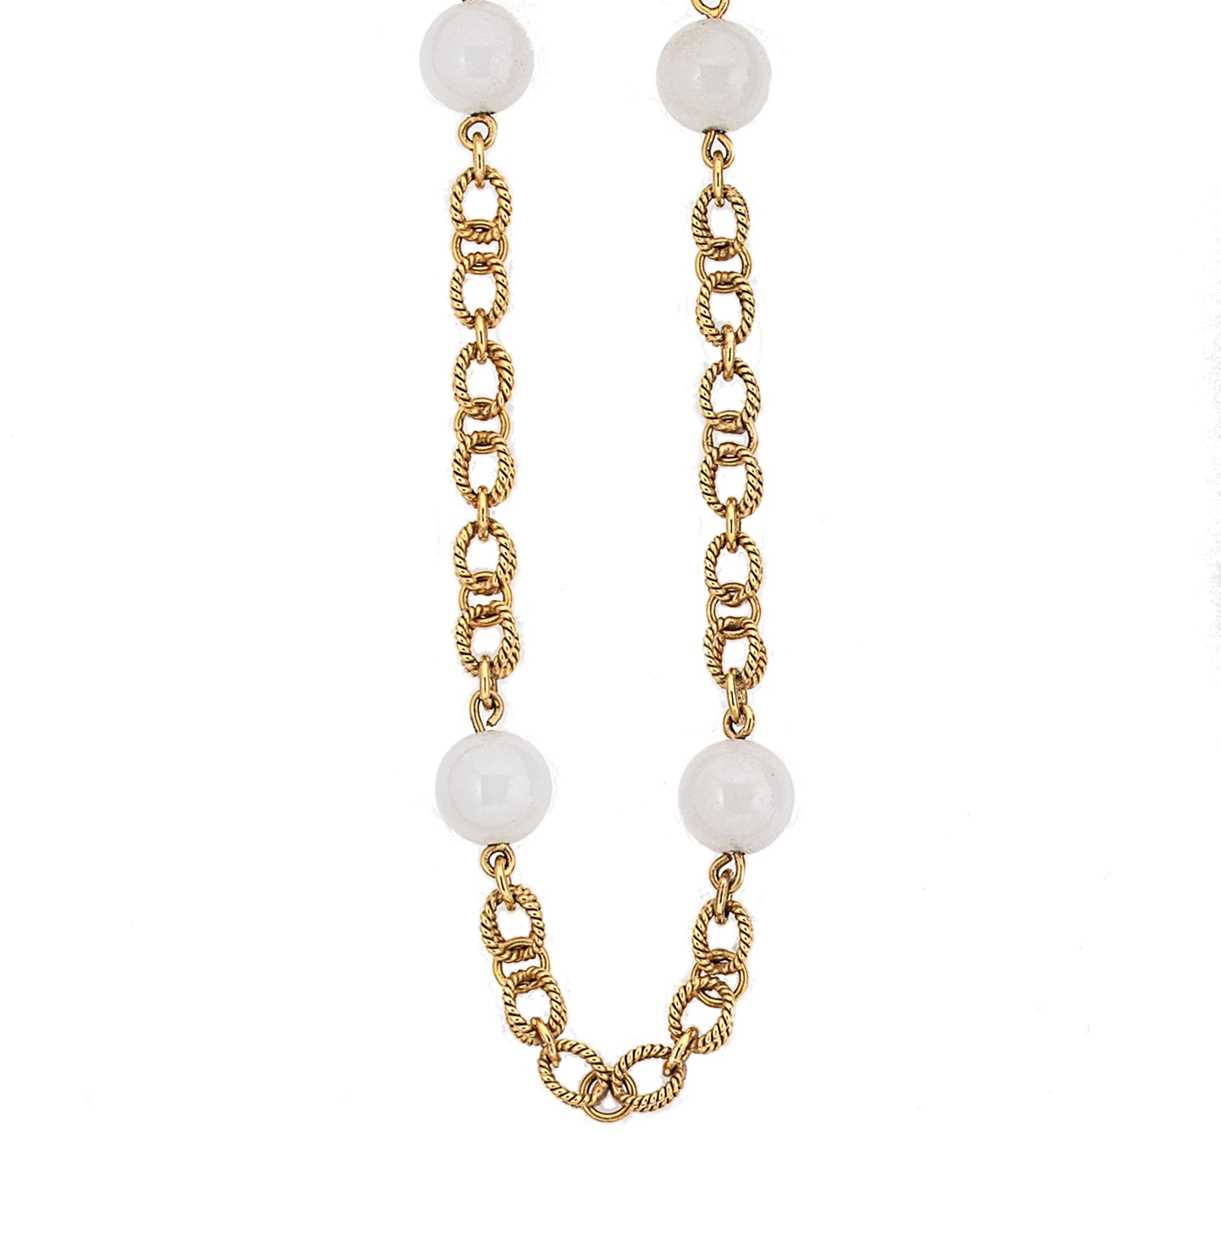 A hardstone bead chain,